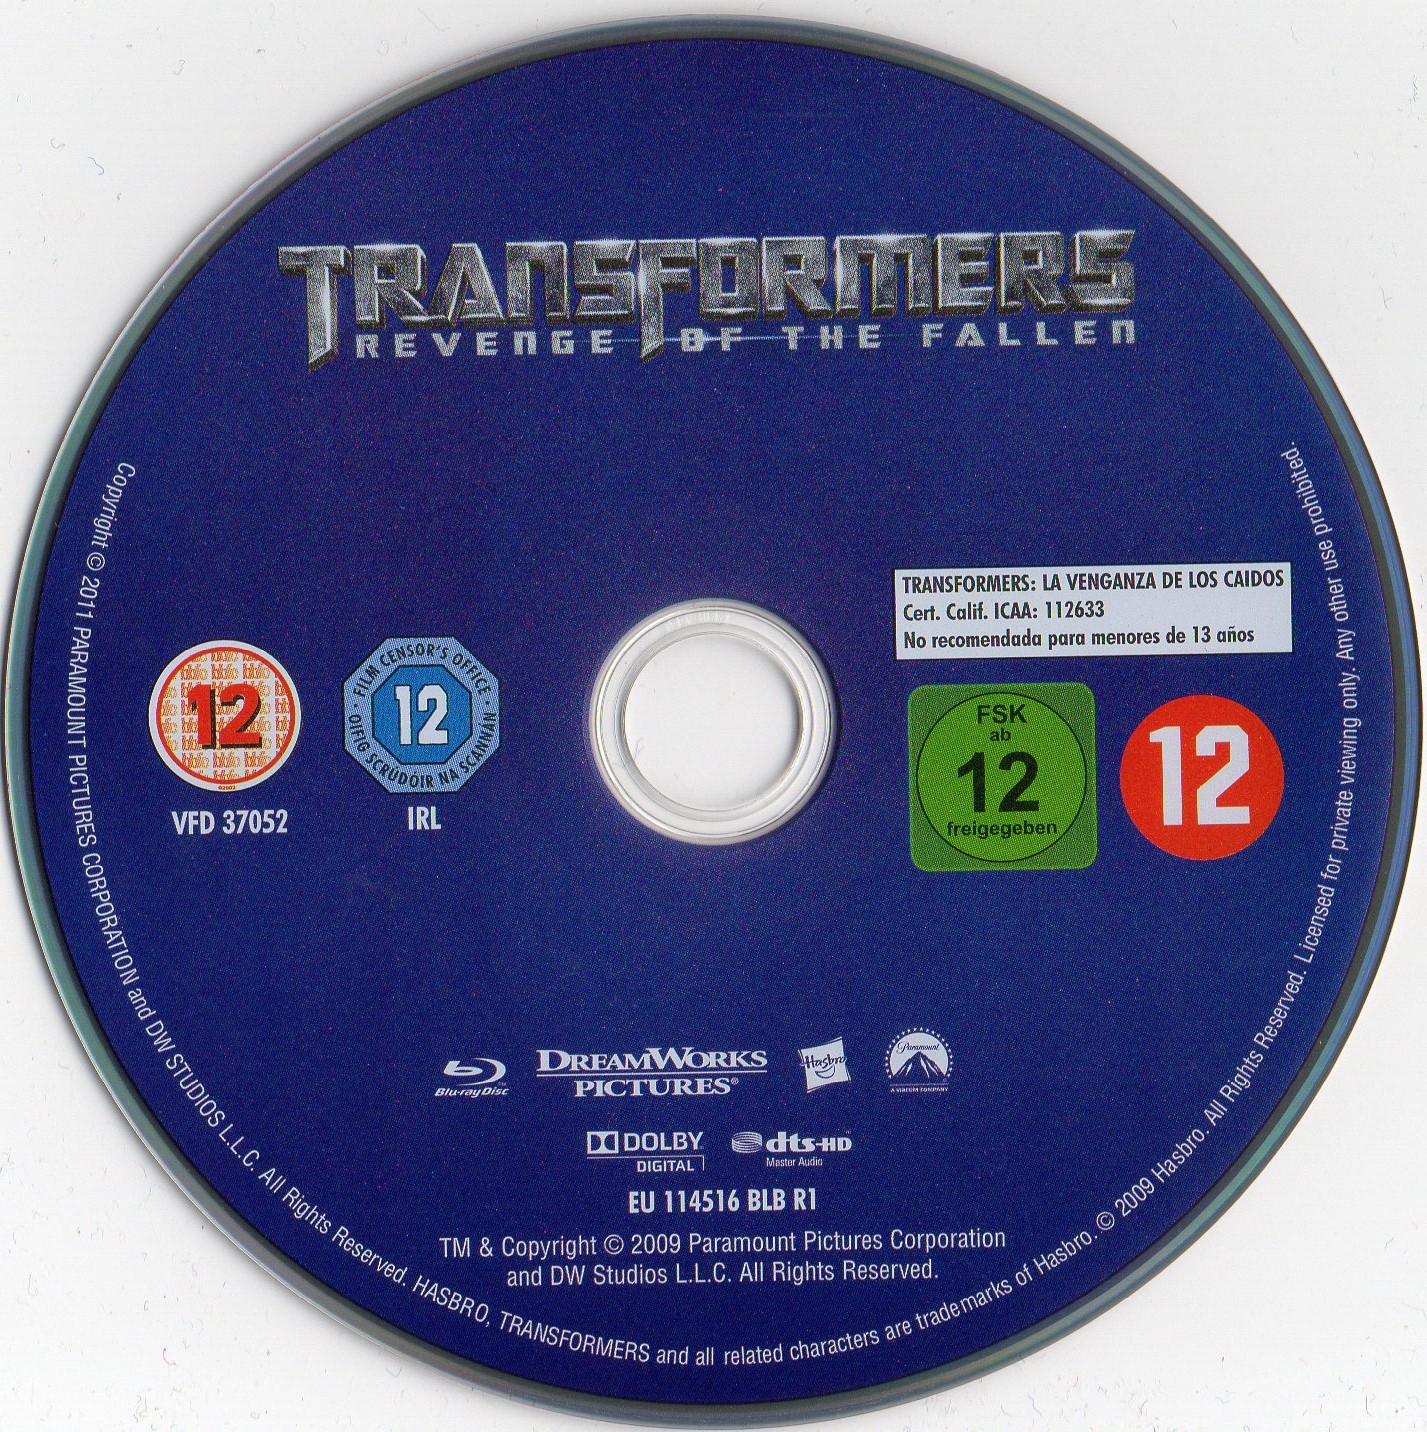 Transformers 2 (BLU-RAY)